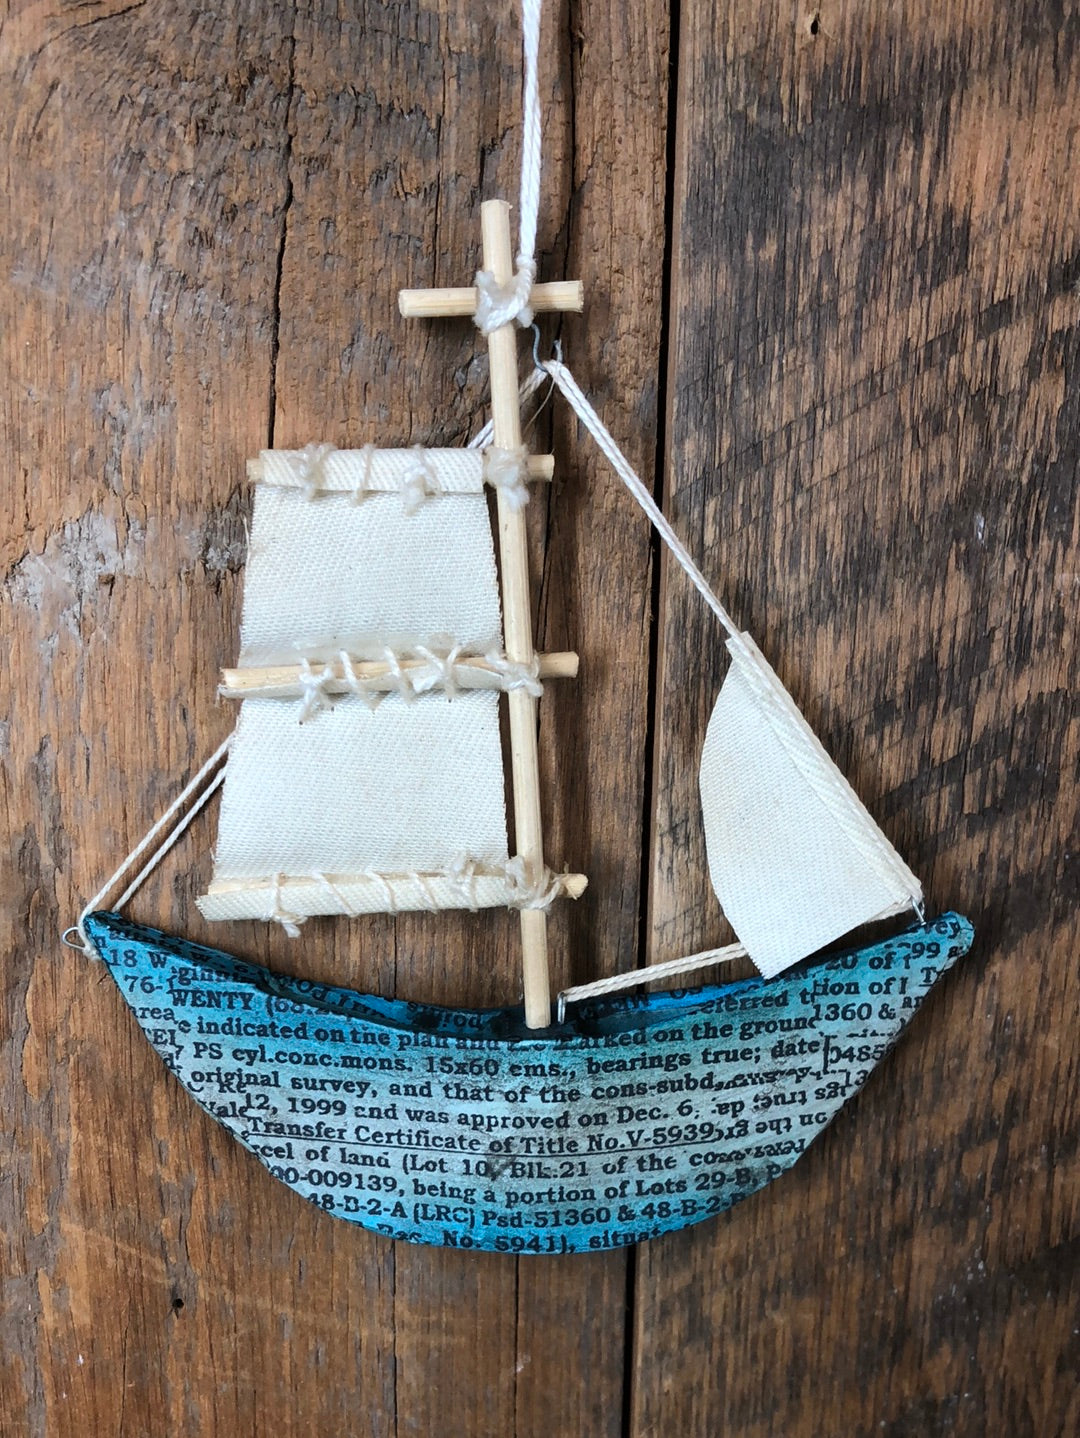 Paper Ship Ornament